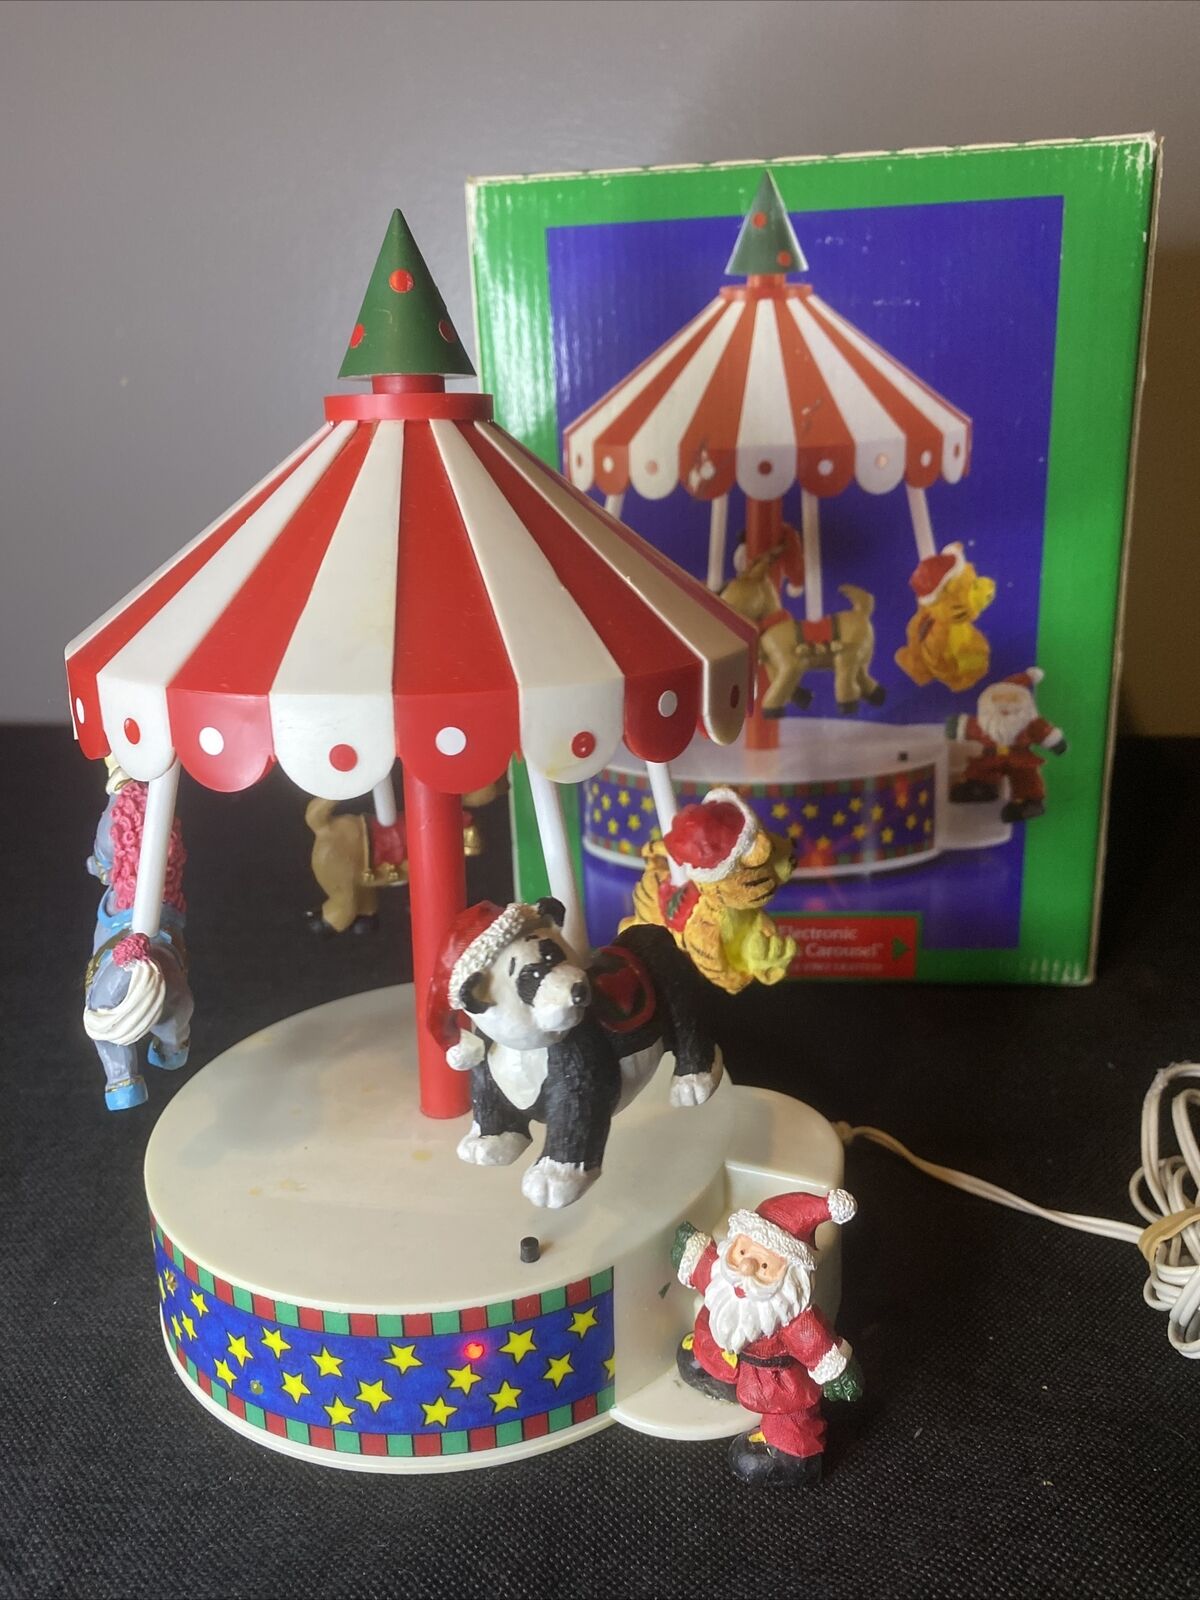 VTG 1995 Holiday Workshop 8 1/2” Musical Christmas Carousel Lighted Tested